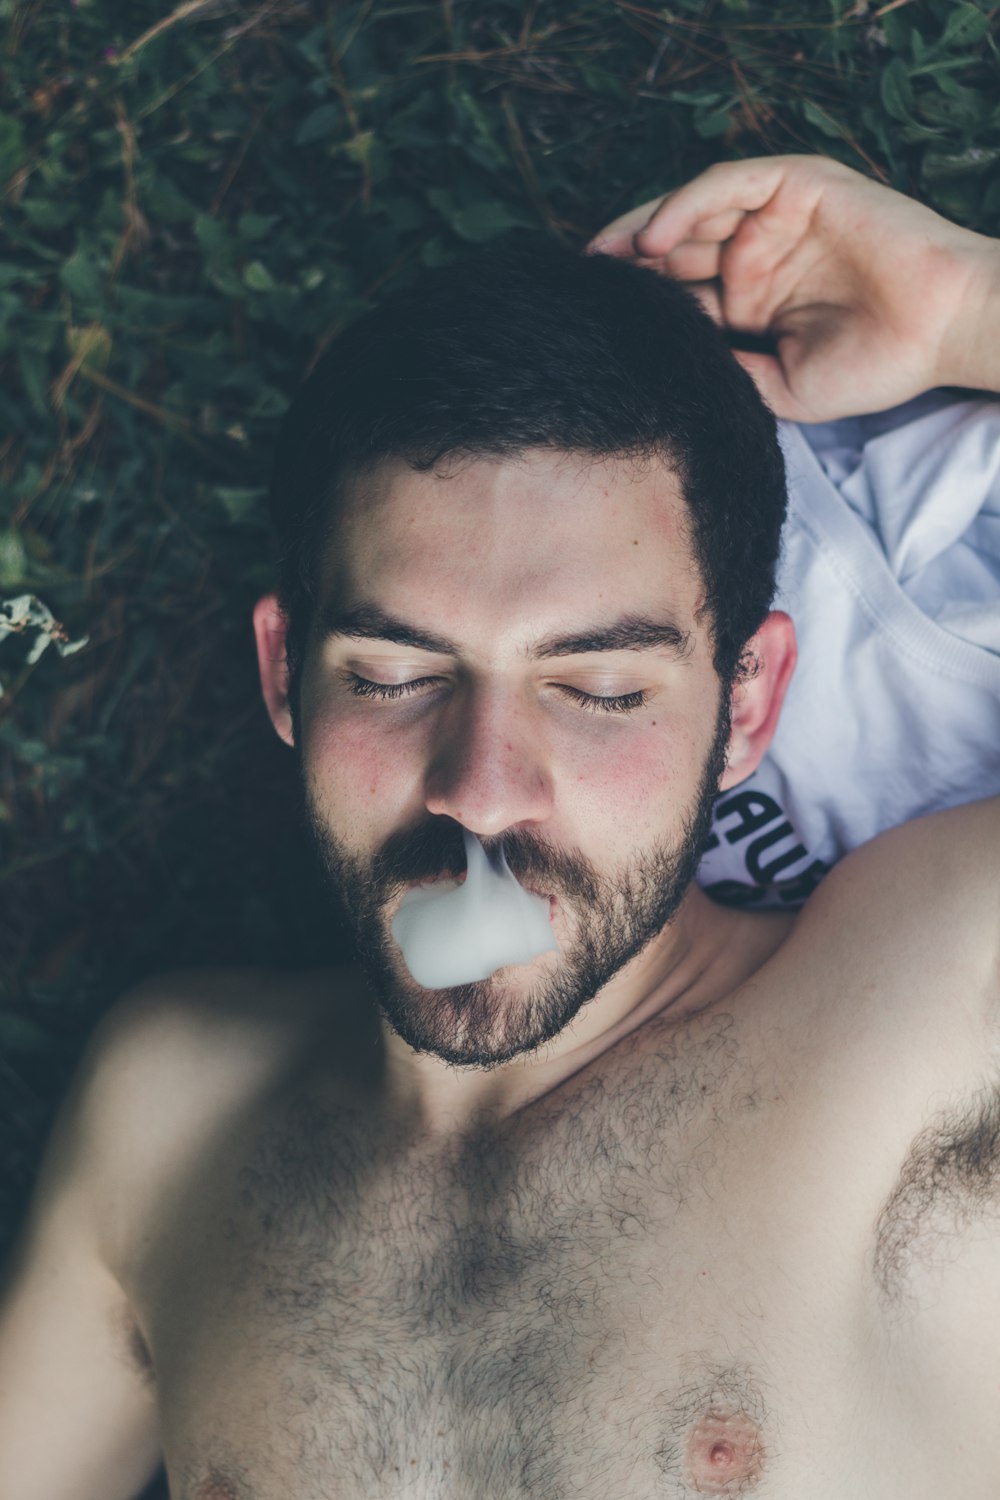 man lying on grass field while smoking